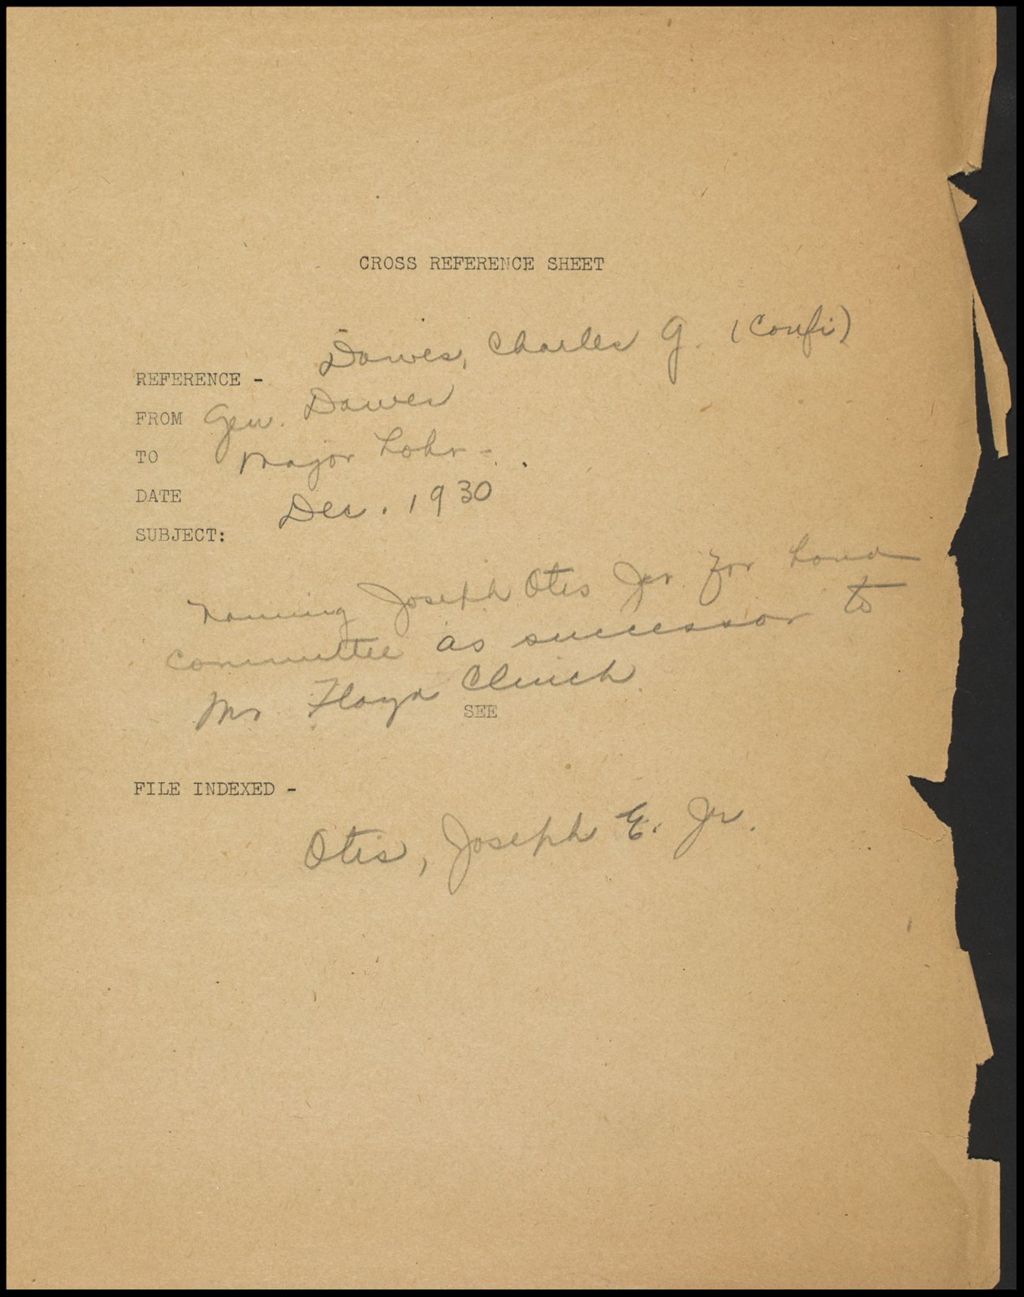 Miniature of Danes, Charles G., correspondence, May - December, 1930 (Folder 9-25)